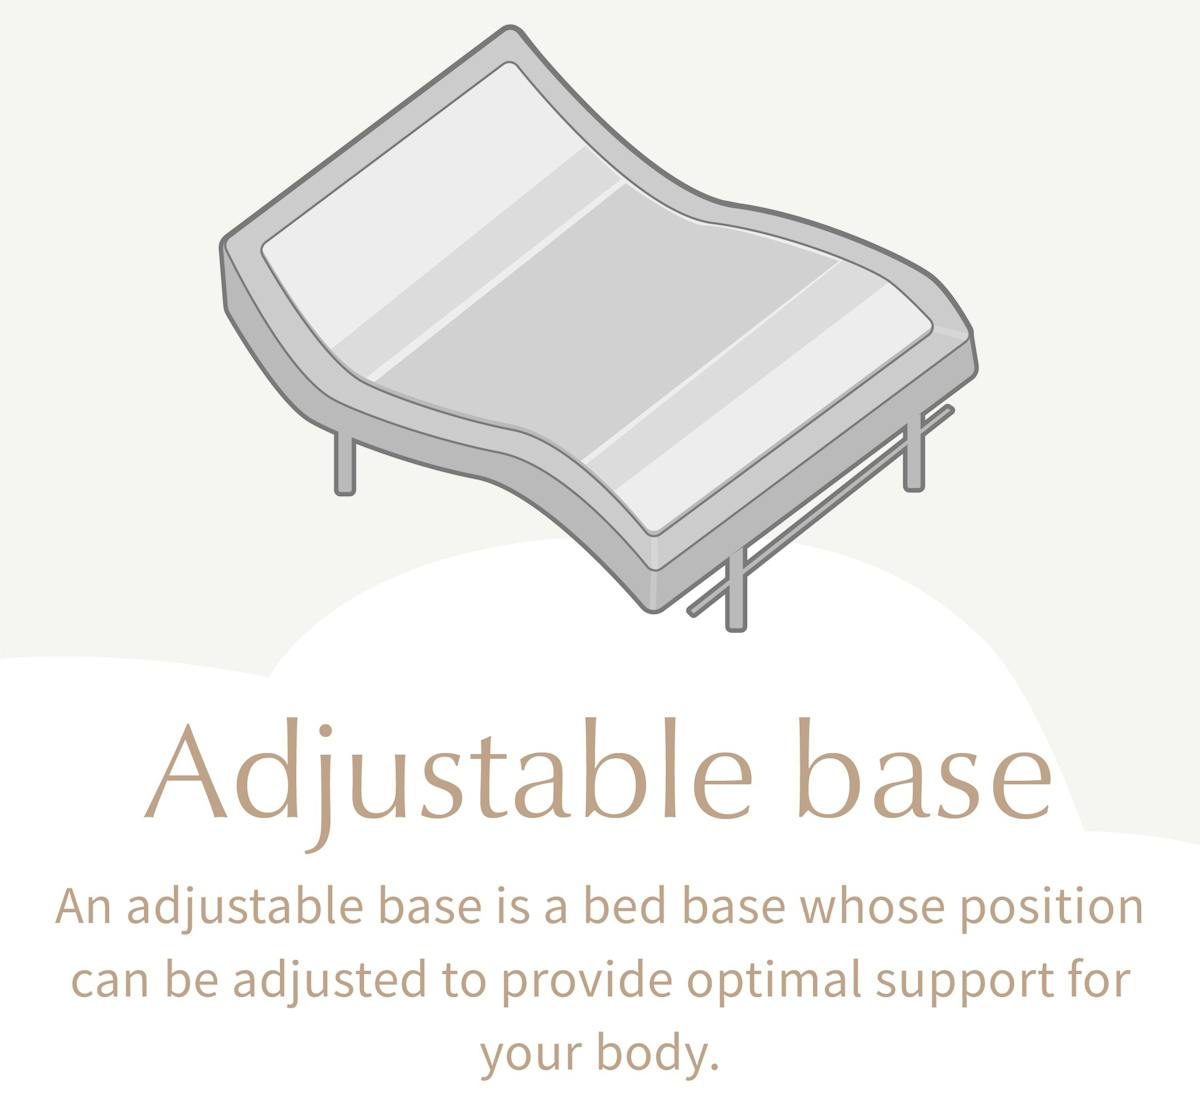 Illustration of an adjustable base with description underneath: 